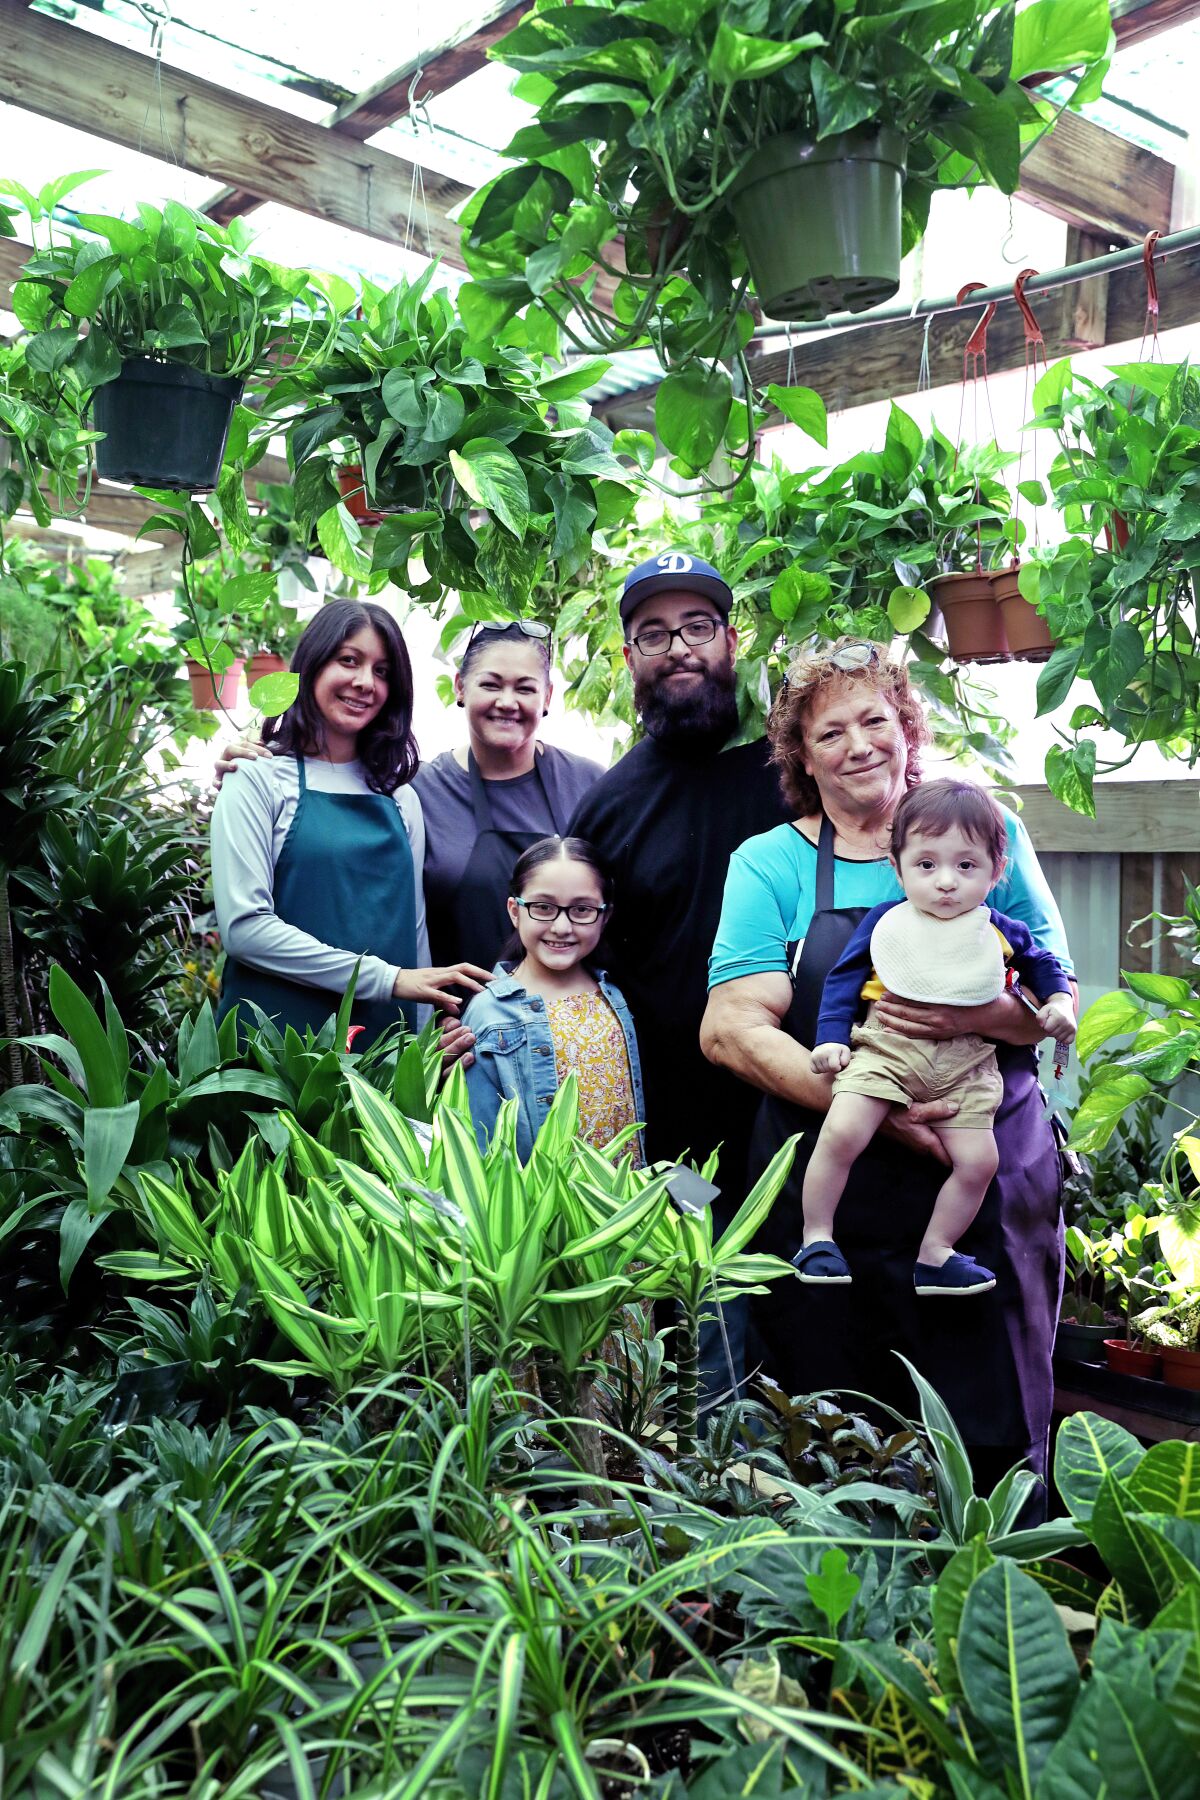 Maria Hurtado Lopez with family members at Avalon Nursery & Ceramics in South Los Angeles.